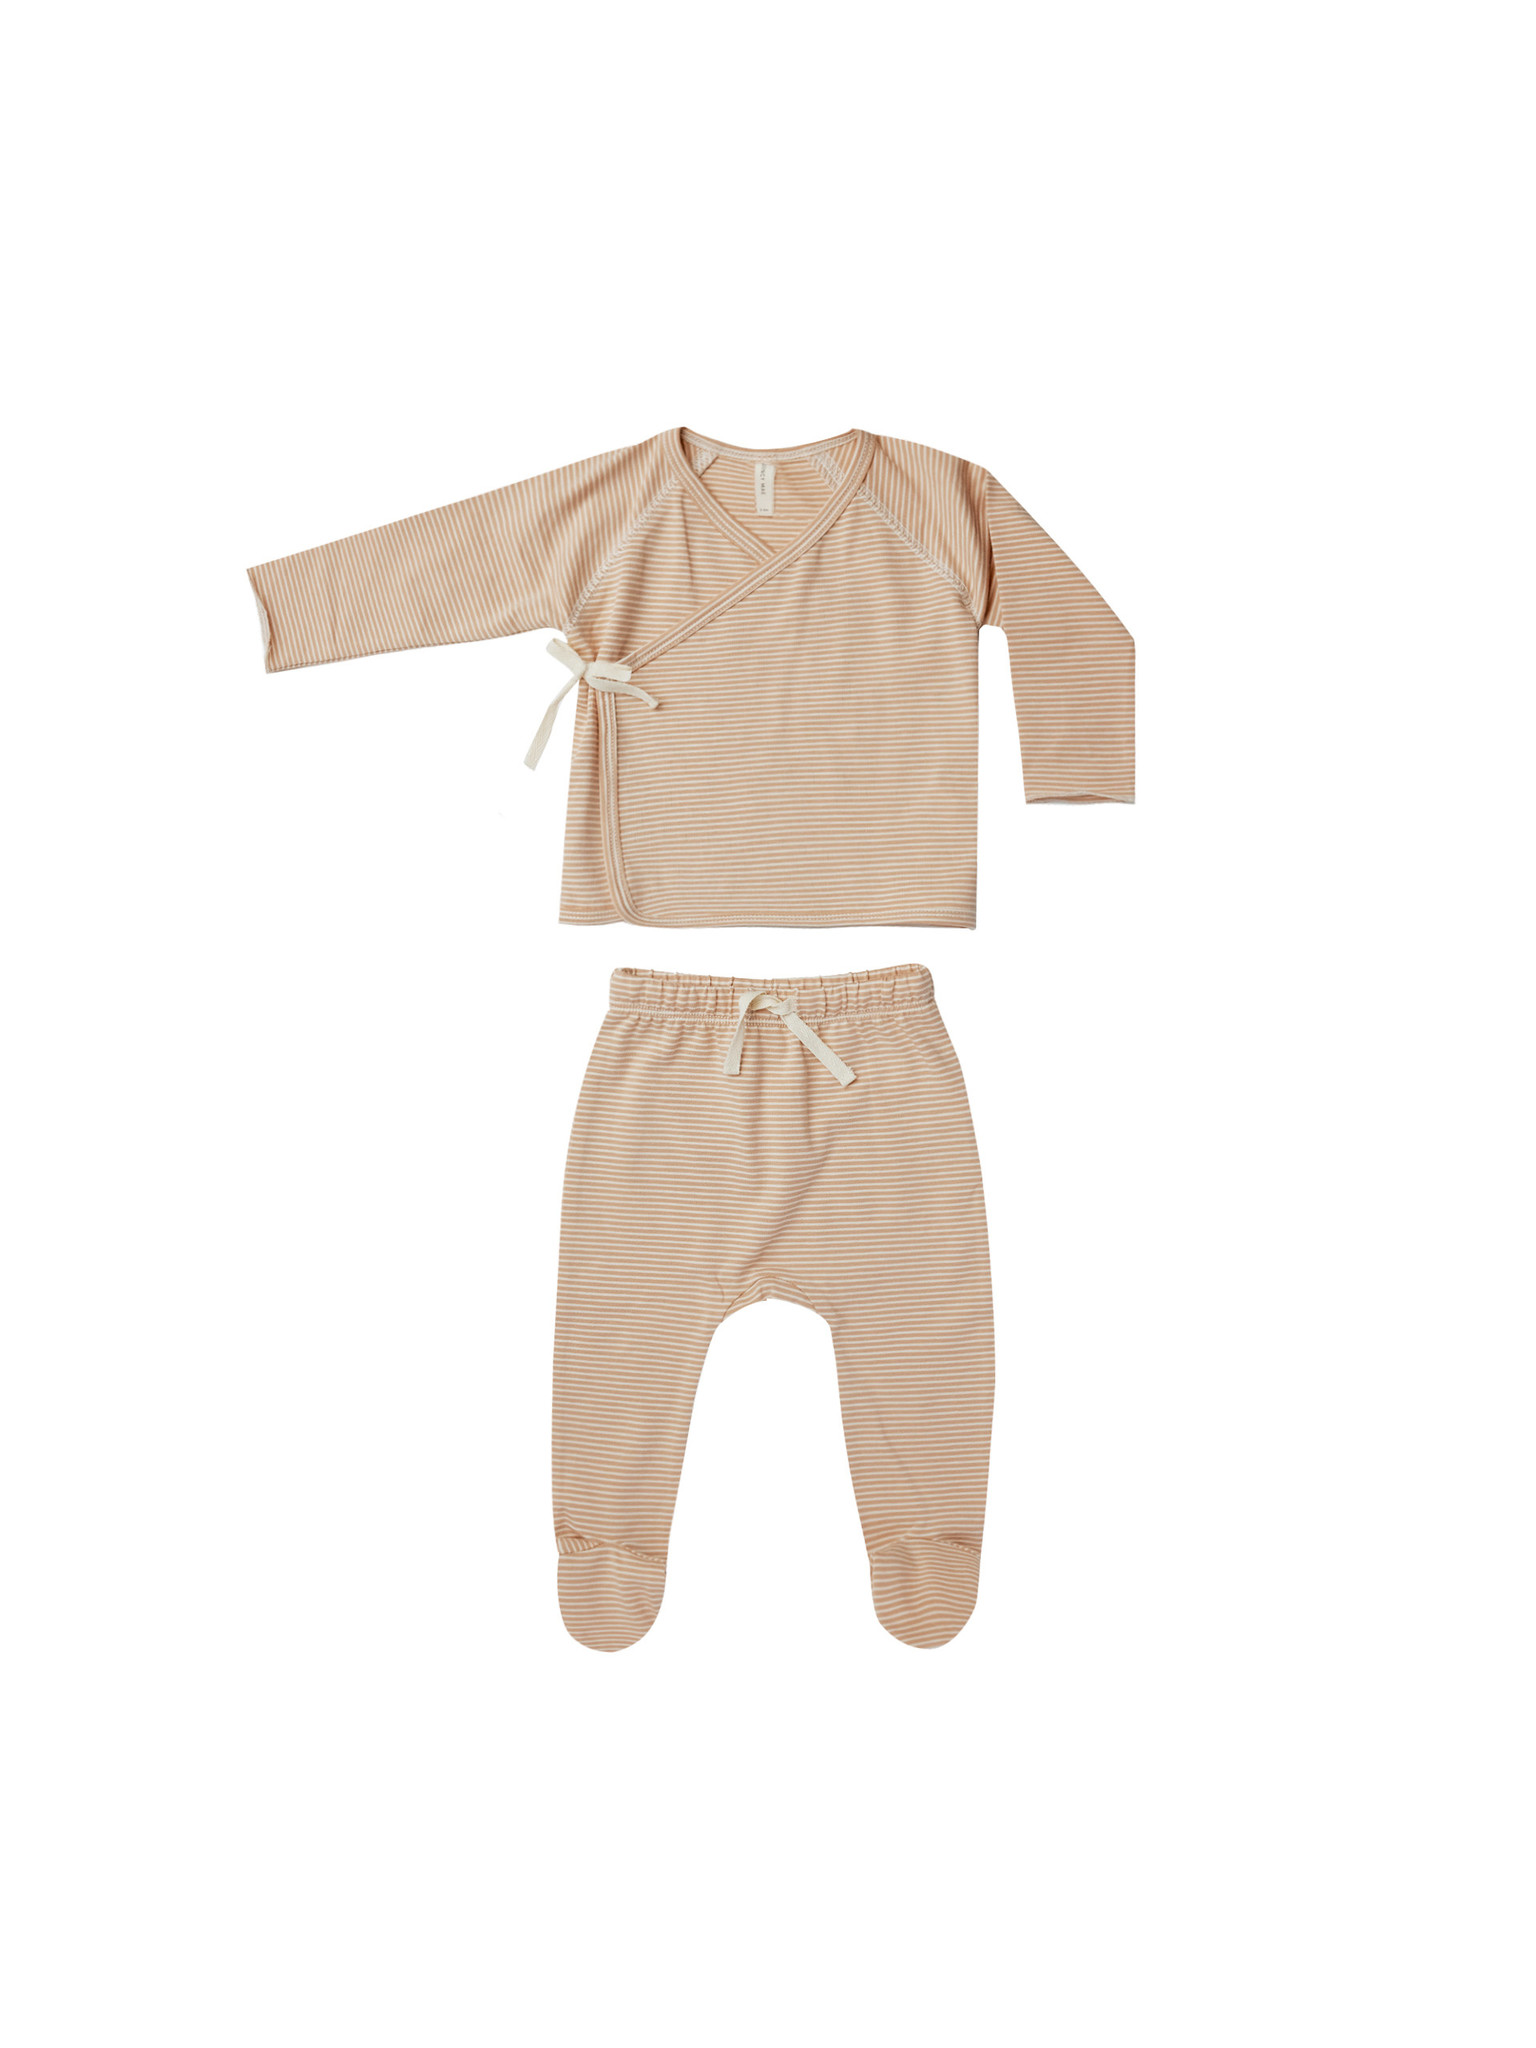 Quincy Mae Wrap Top + Pant Set | Apricot Stripe